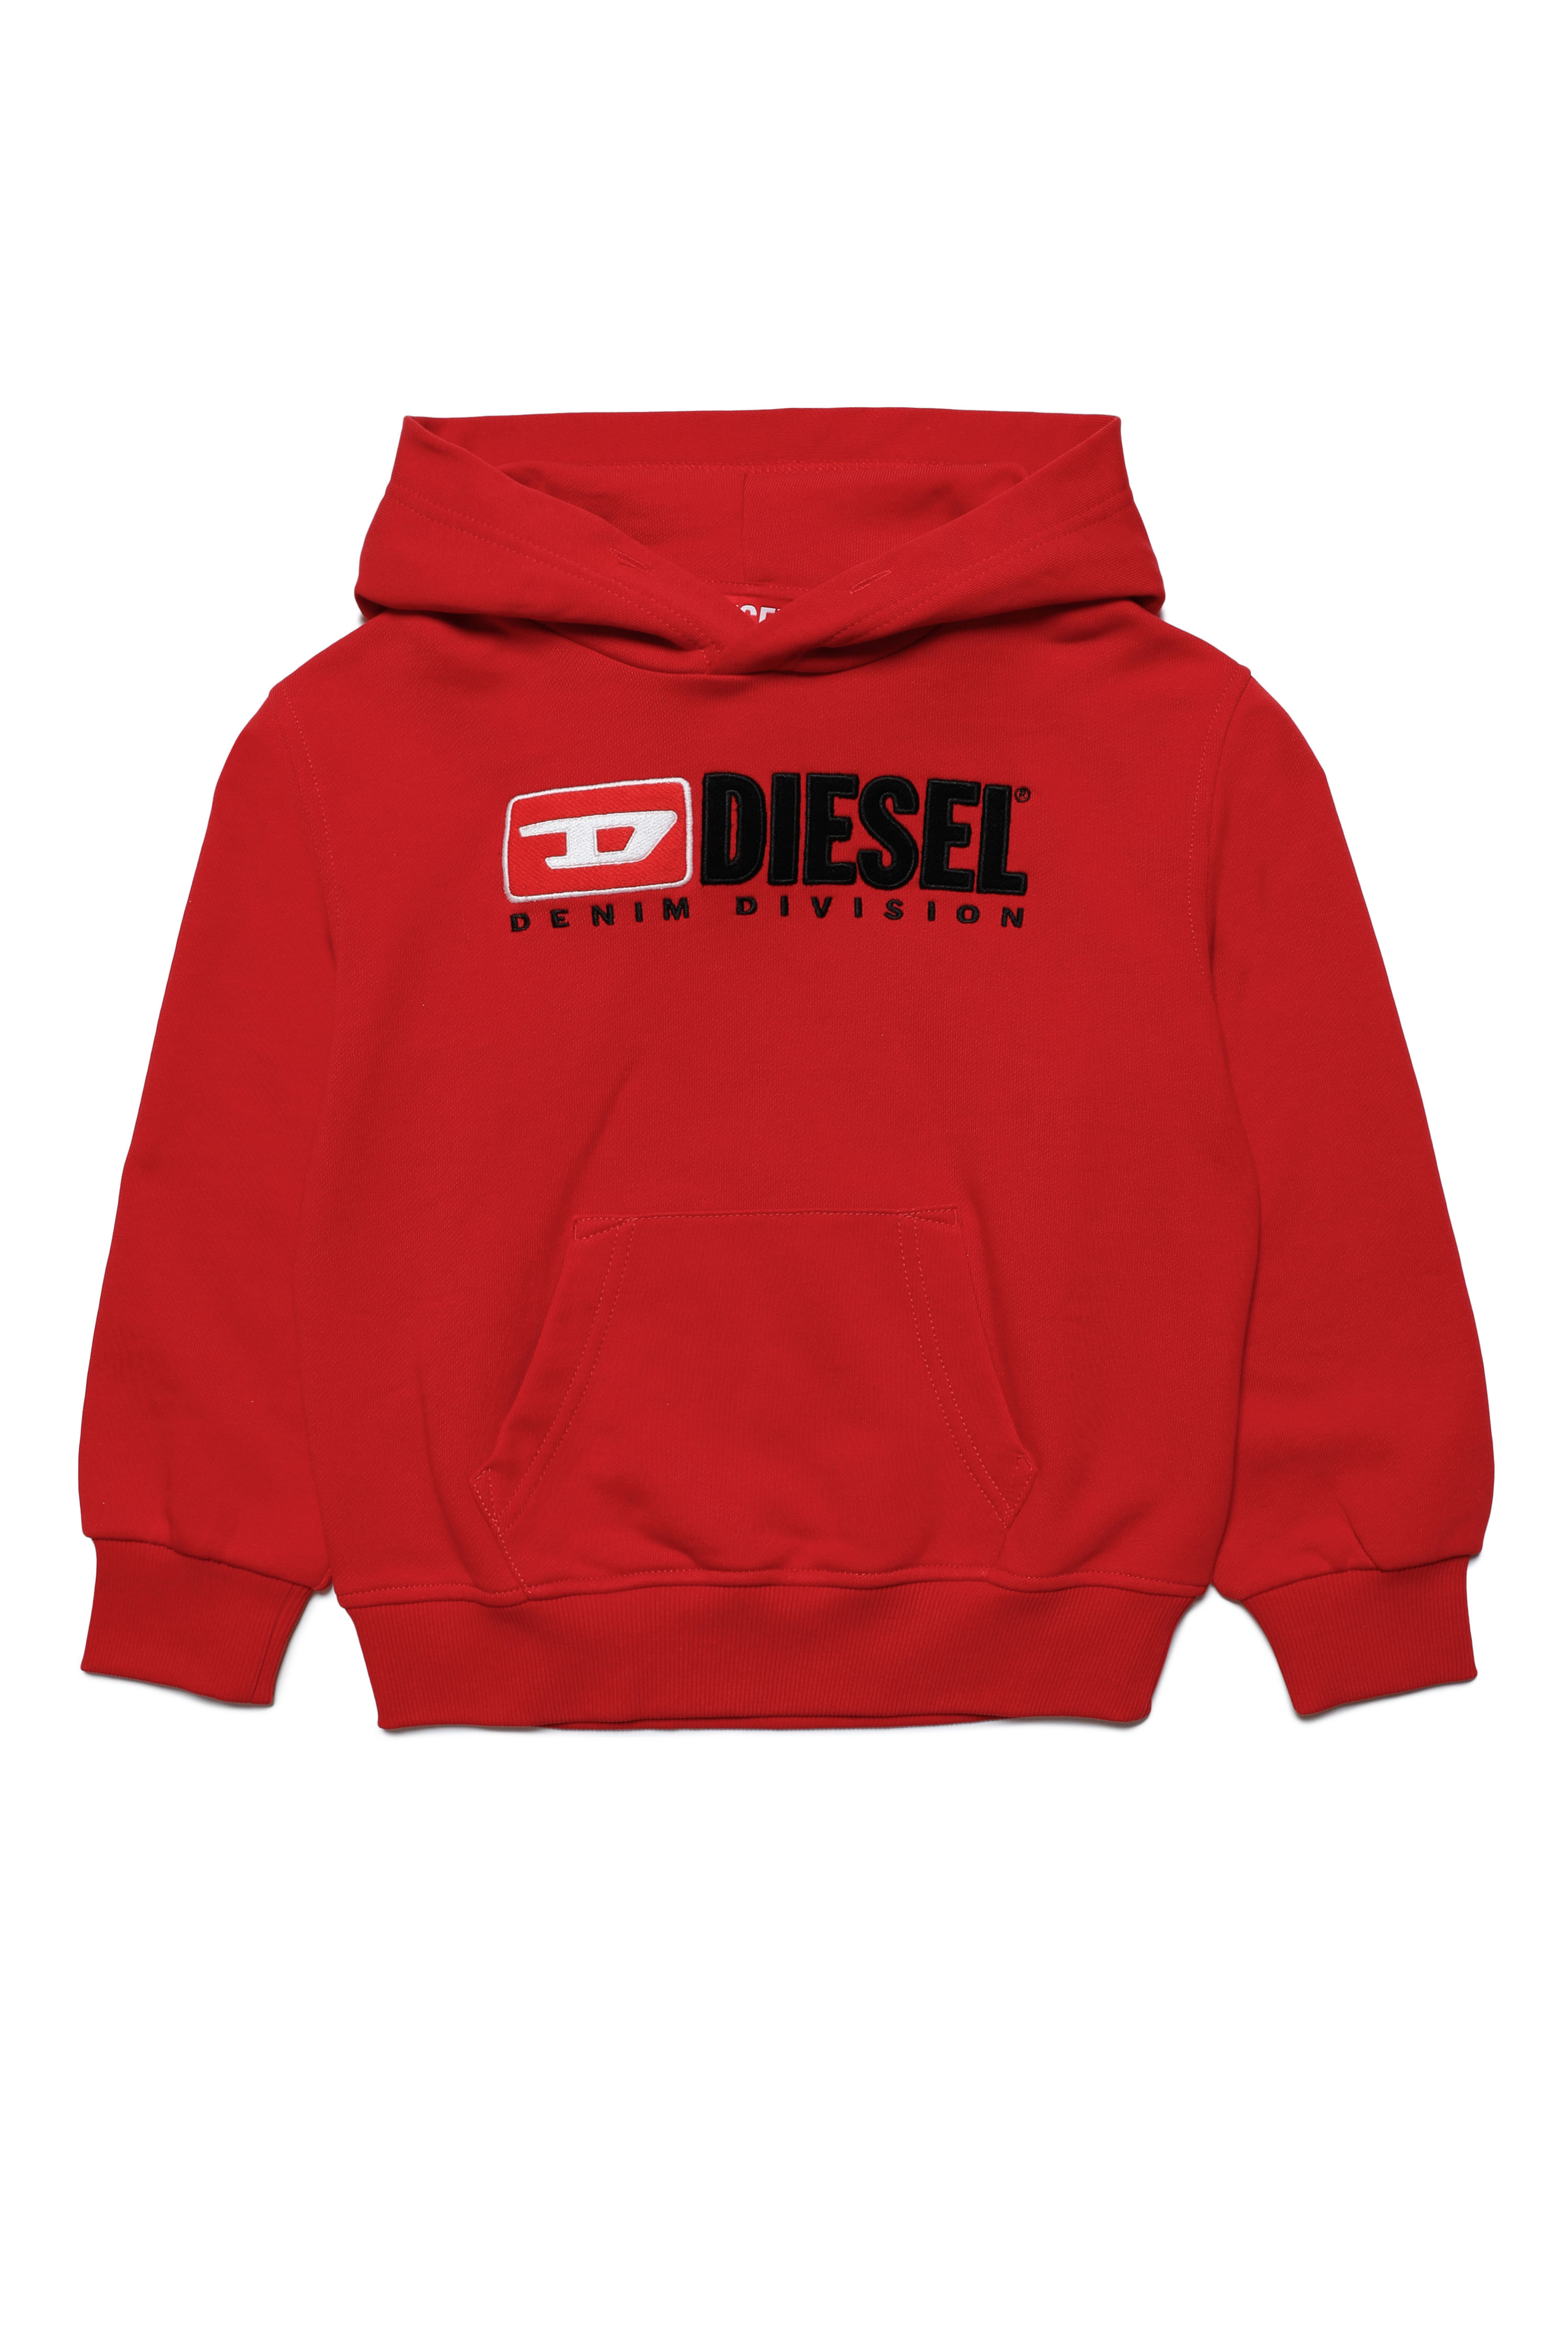 Diesel - SGINNDIVE OVER, Rosso - Image 1